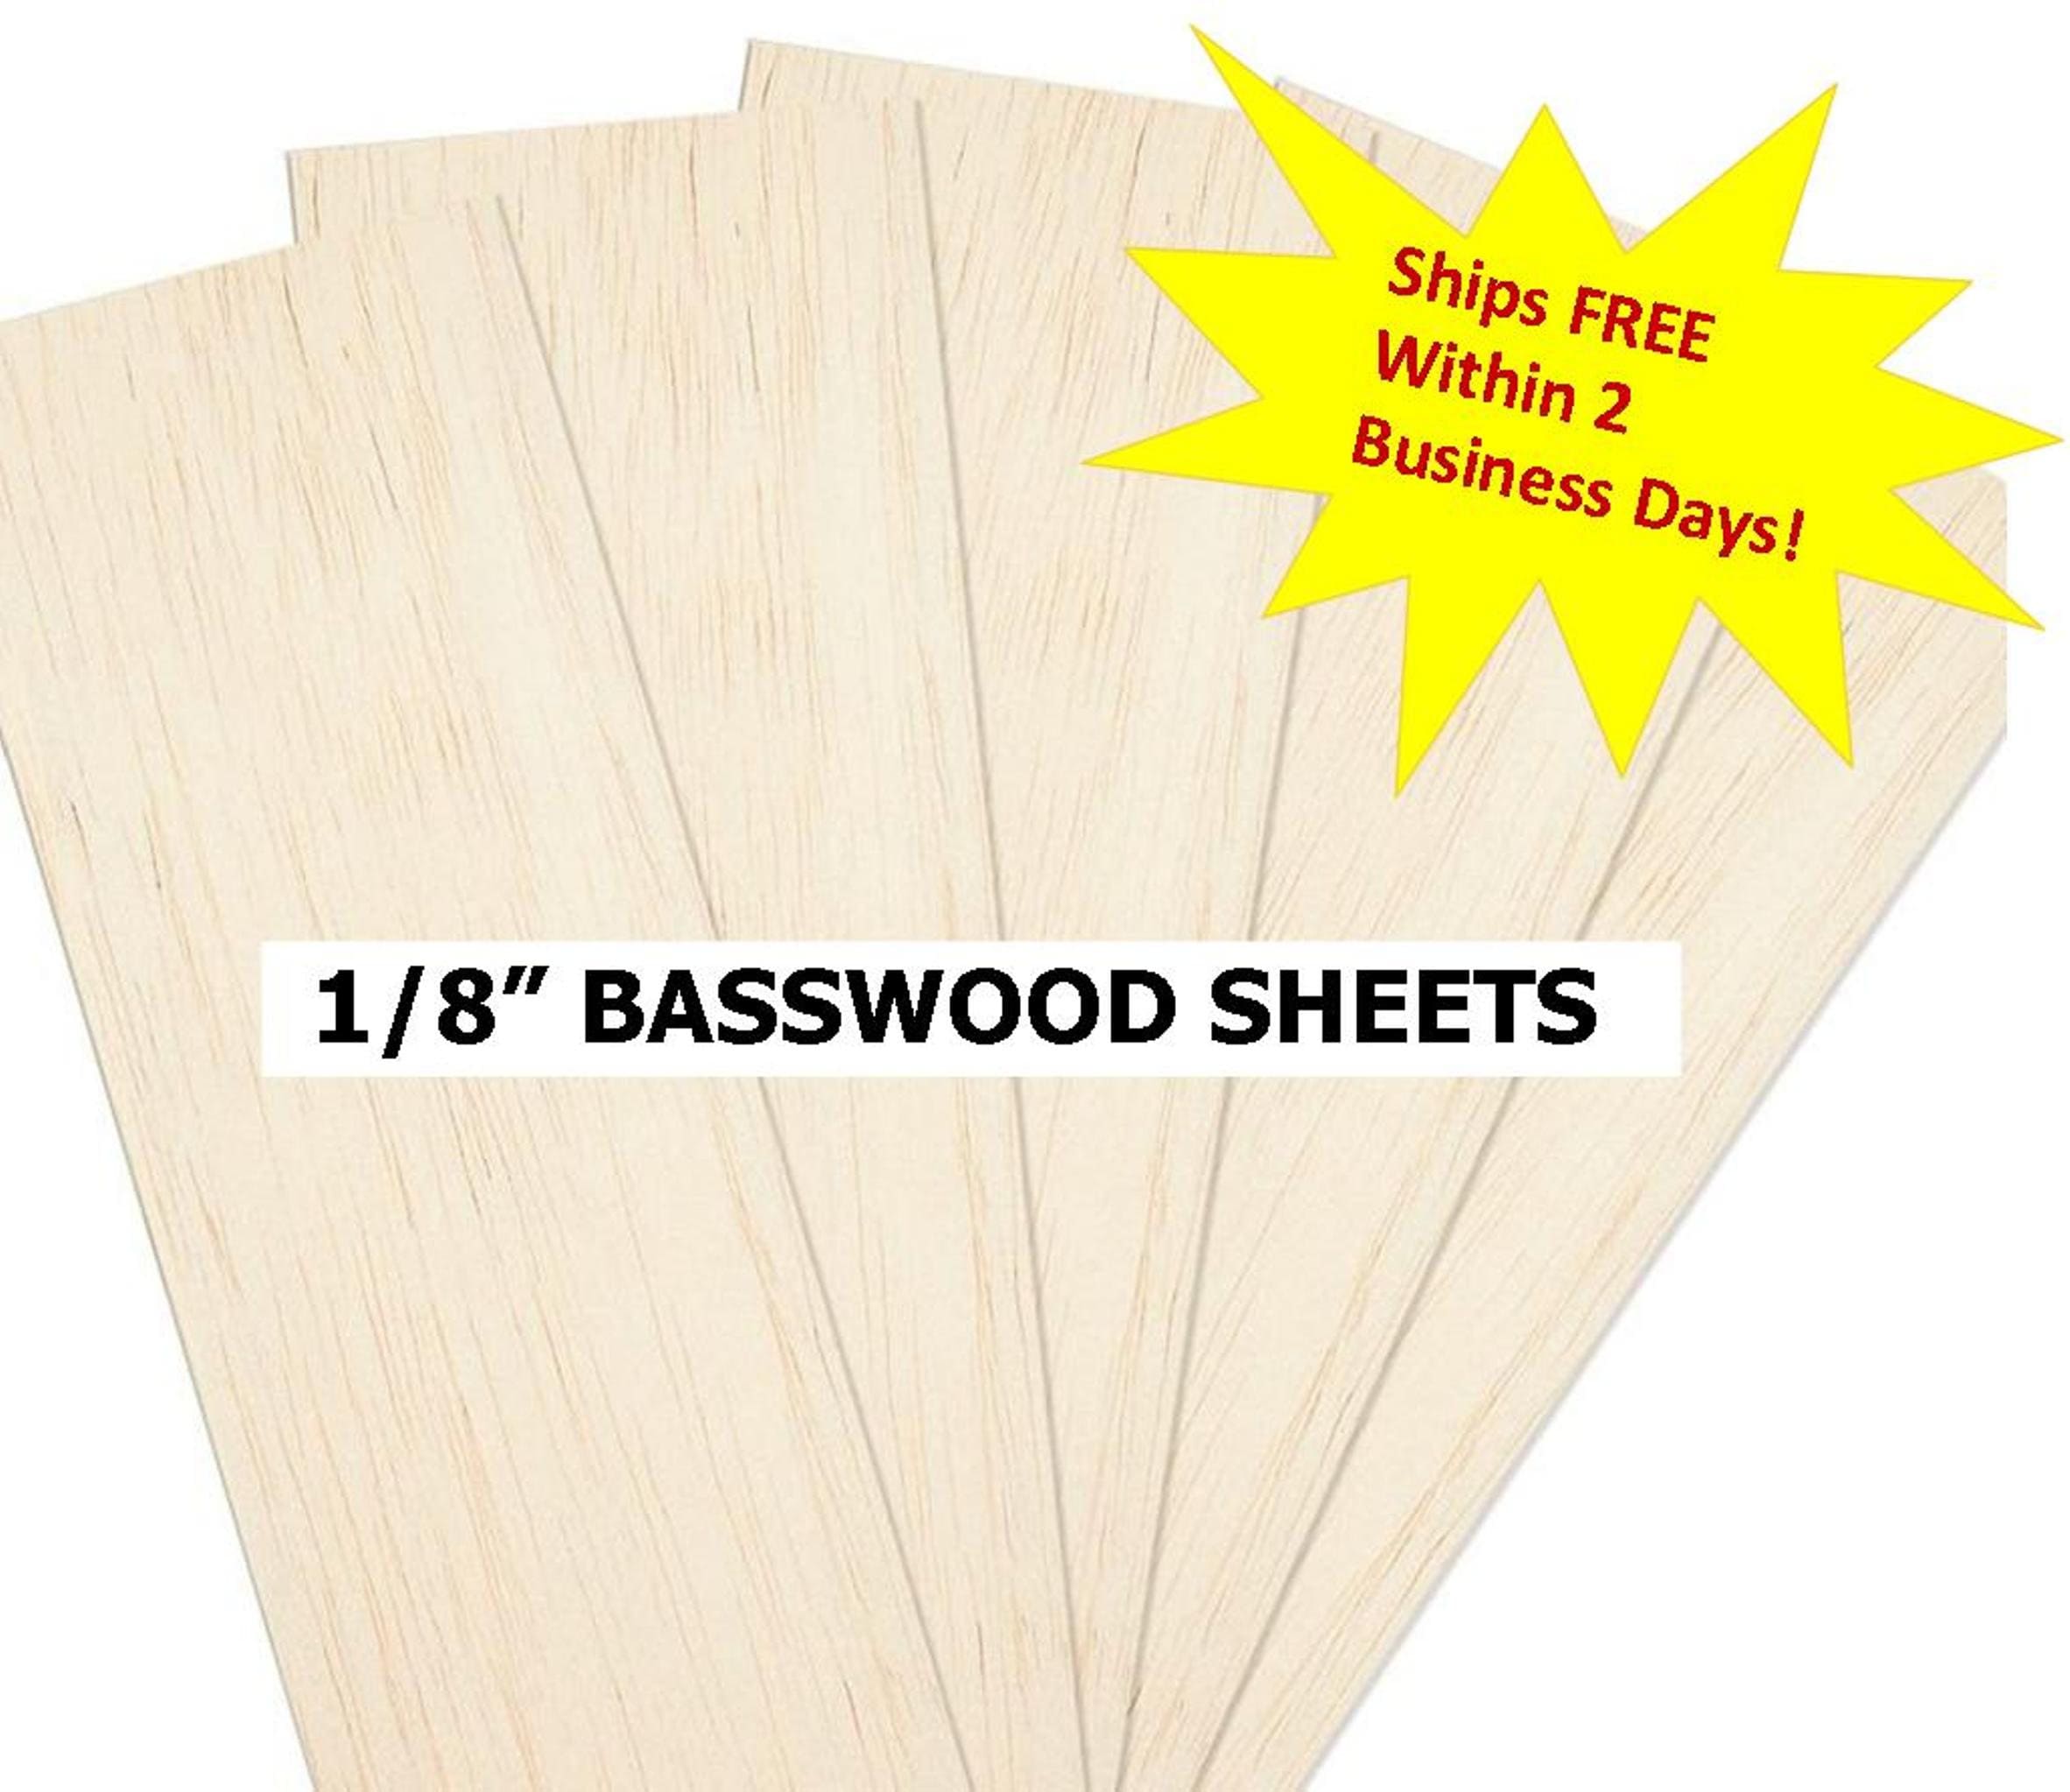 Basswood Sheet - 1/8 x 4 x 18 1/8 x 4 x 18 Basswood Sheet